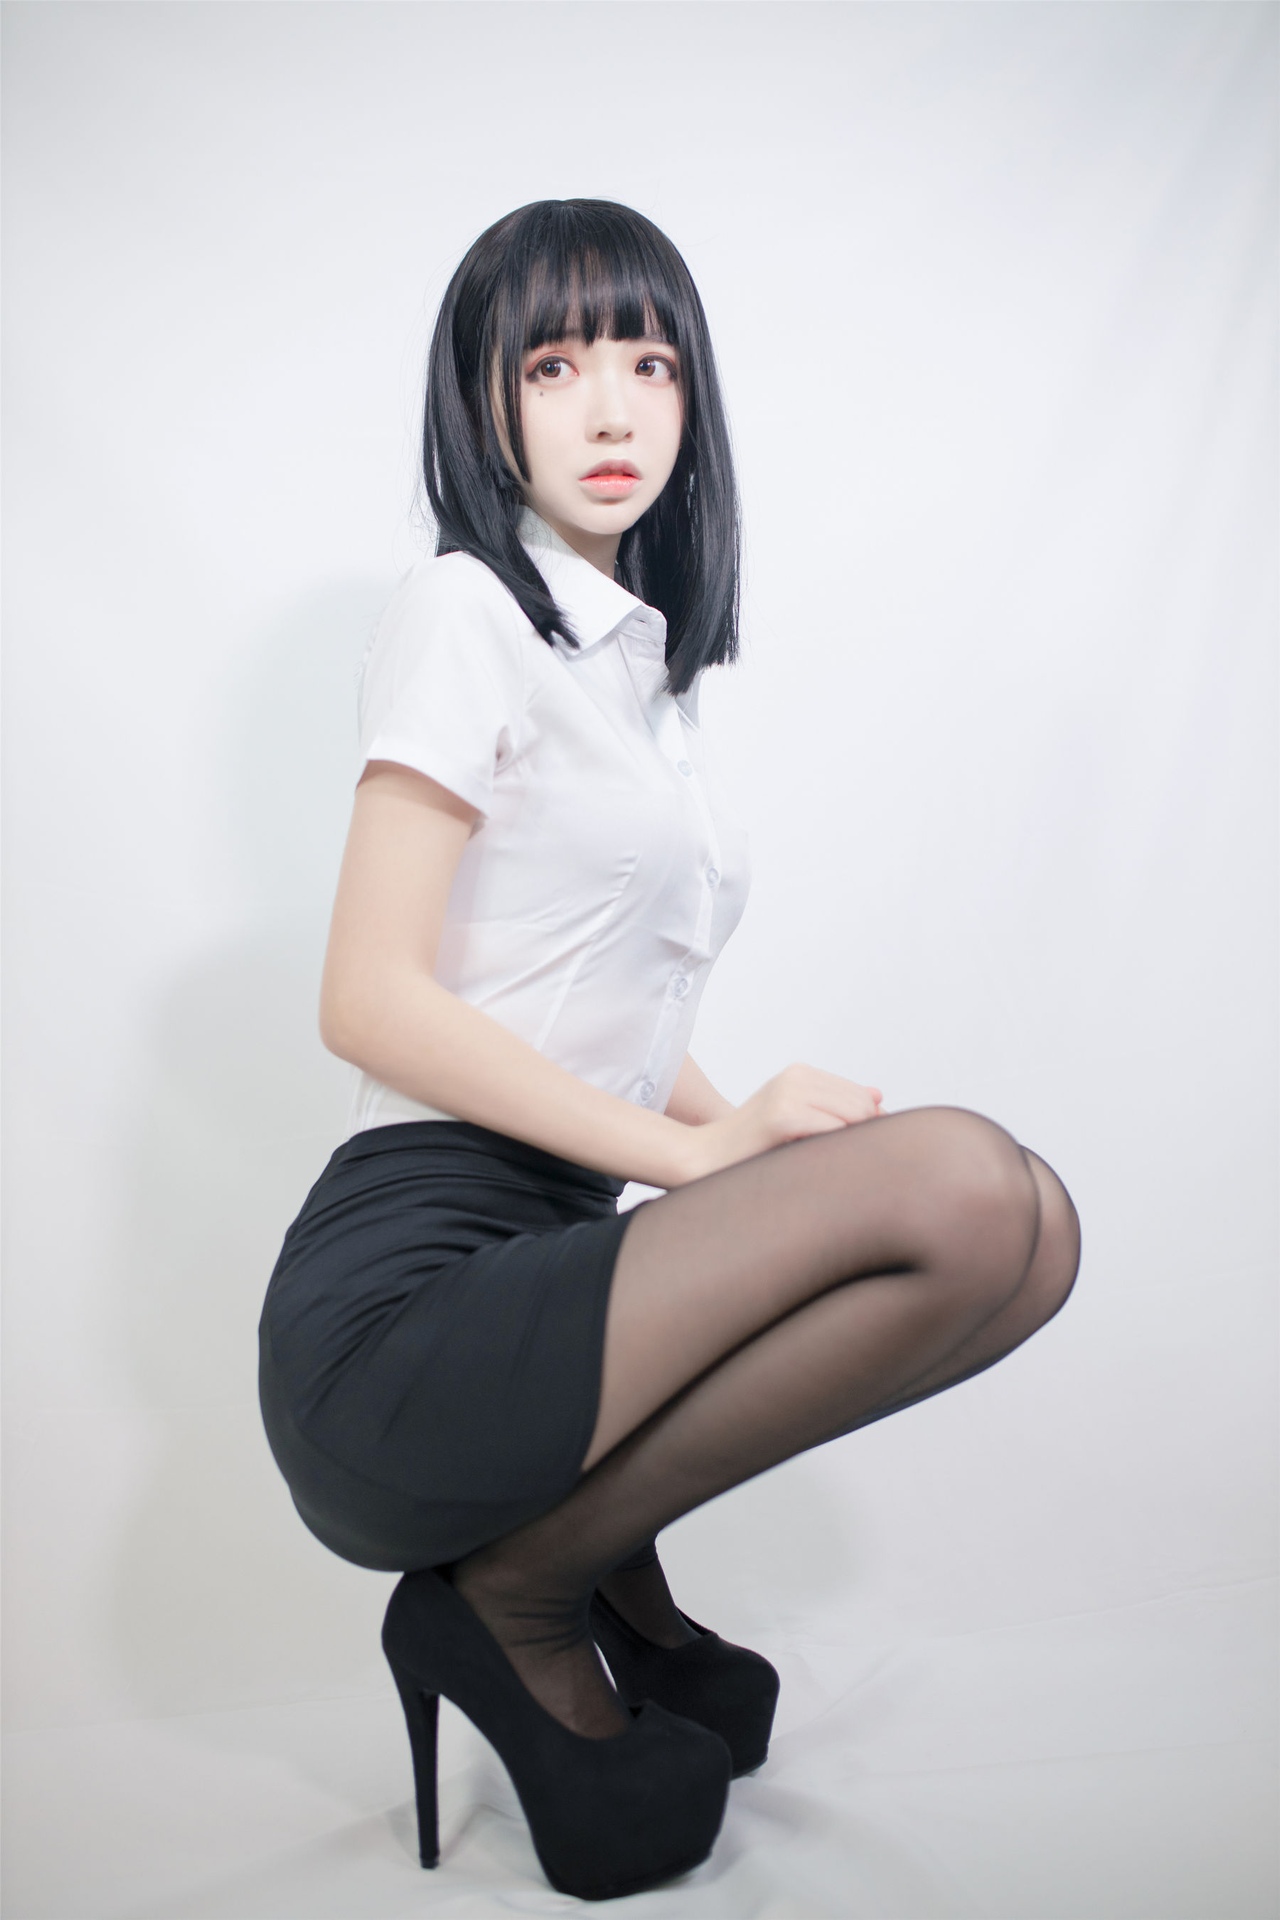 Women Model Asian Shoulder Length Hair Dark Hair Women Indoors Black Pantyhose White Shirt High Heel 1280x1920